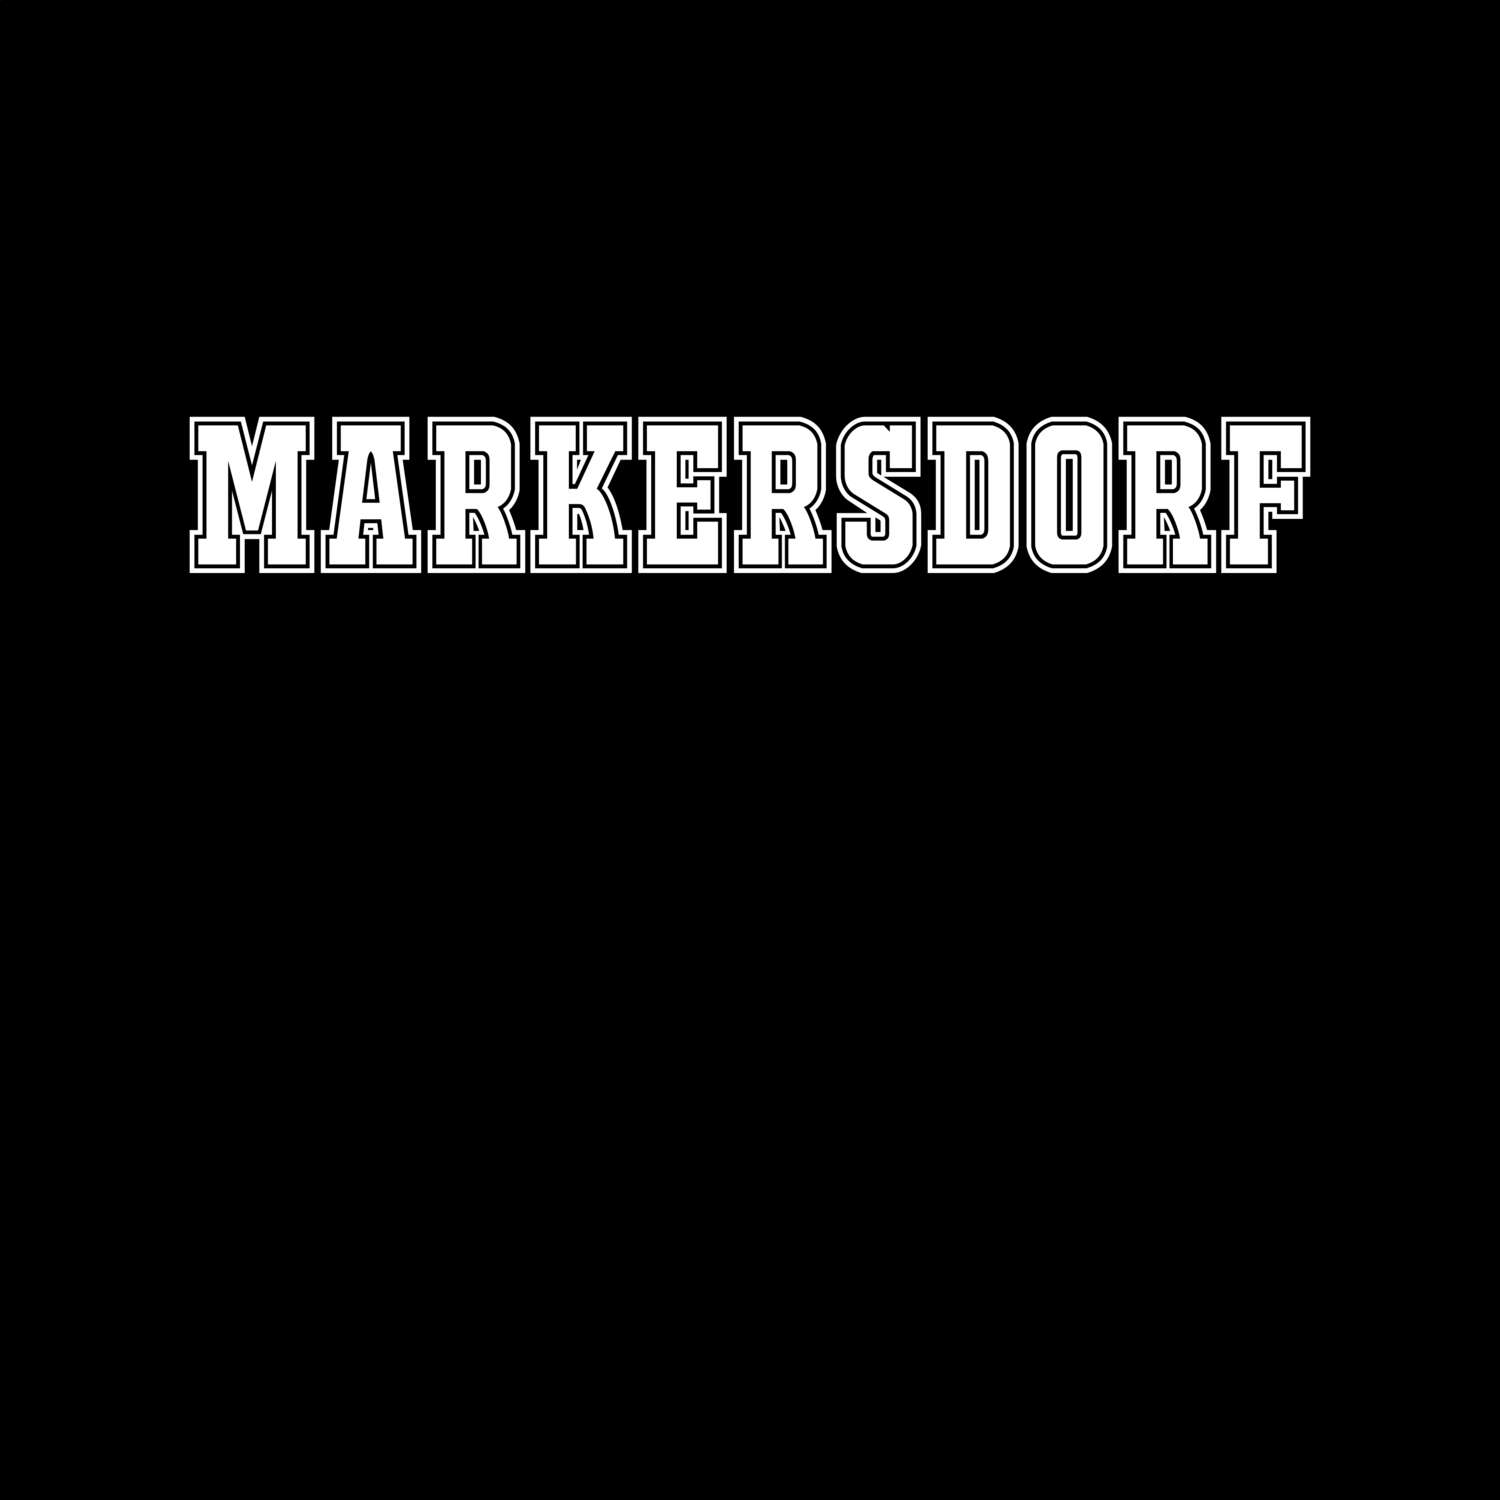 Markersdorf T-Shirt »Classic«